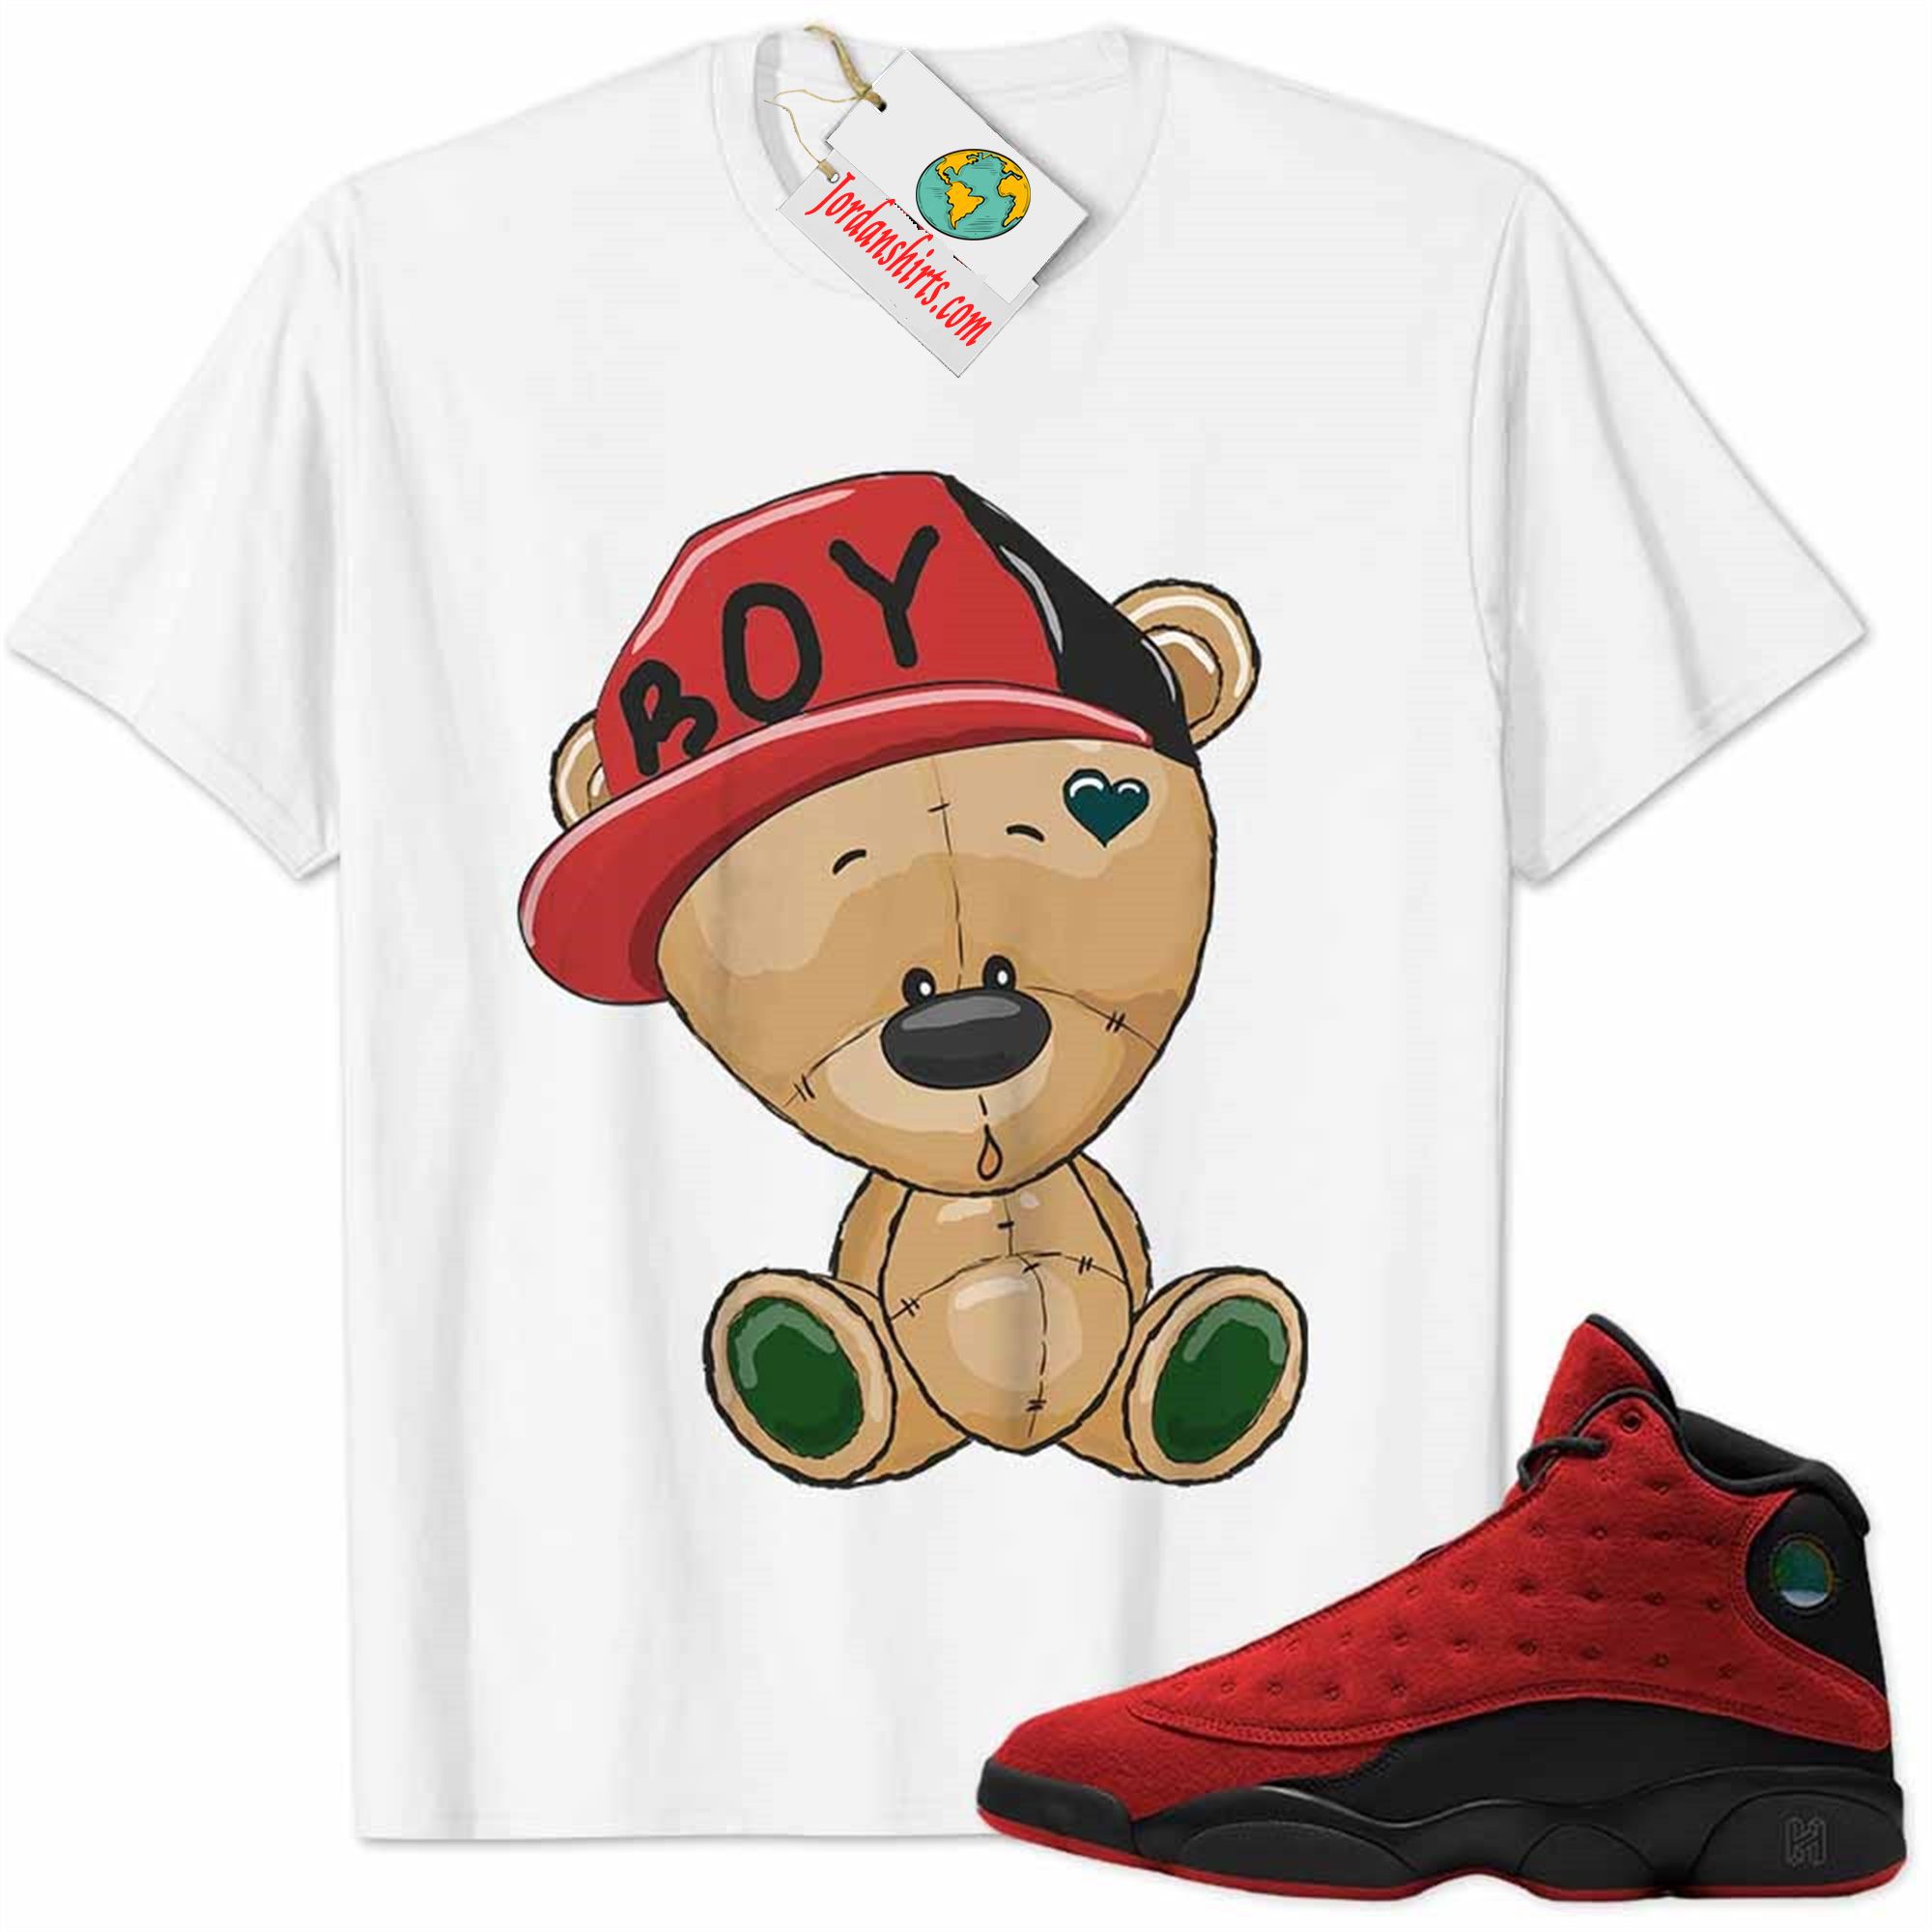 Jordan 13 Shirt, Jordan 13 Reverse Bred Shirt Cute Baby Teddy Bear White Full Size Up To 5xl